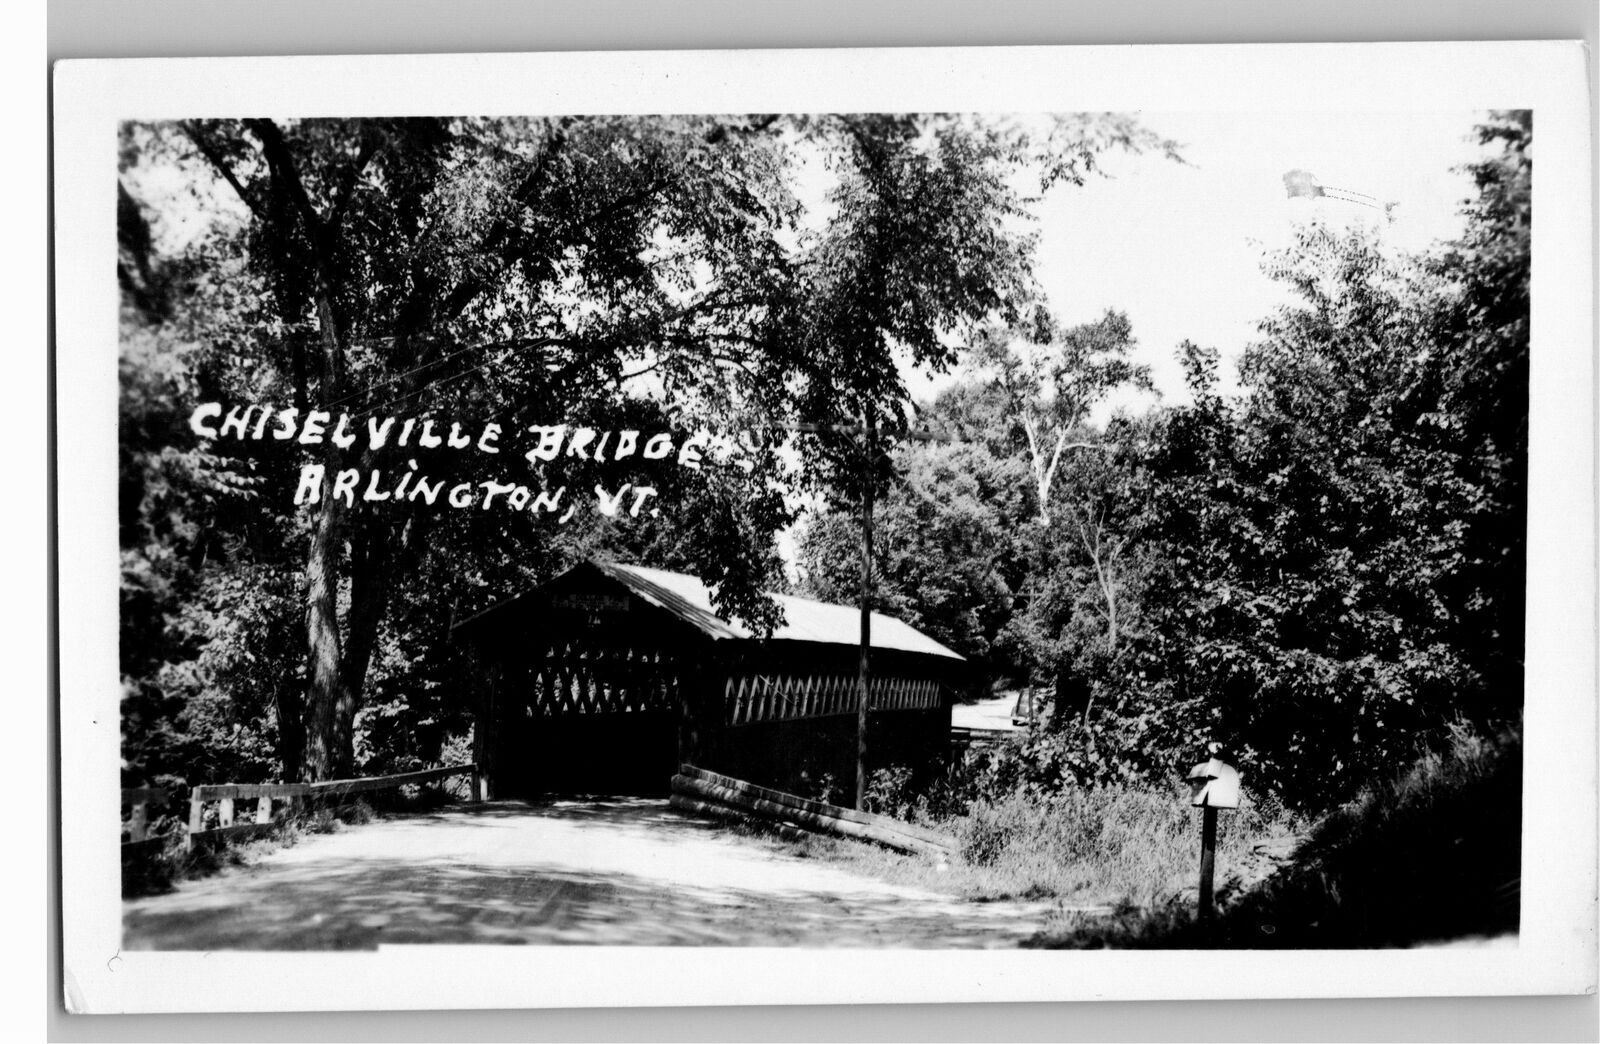 Postcard RPPC Covered Bridge Chiselville Bridge Arlington VT B&W C1930 Vintage